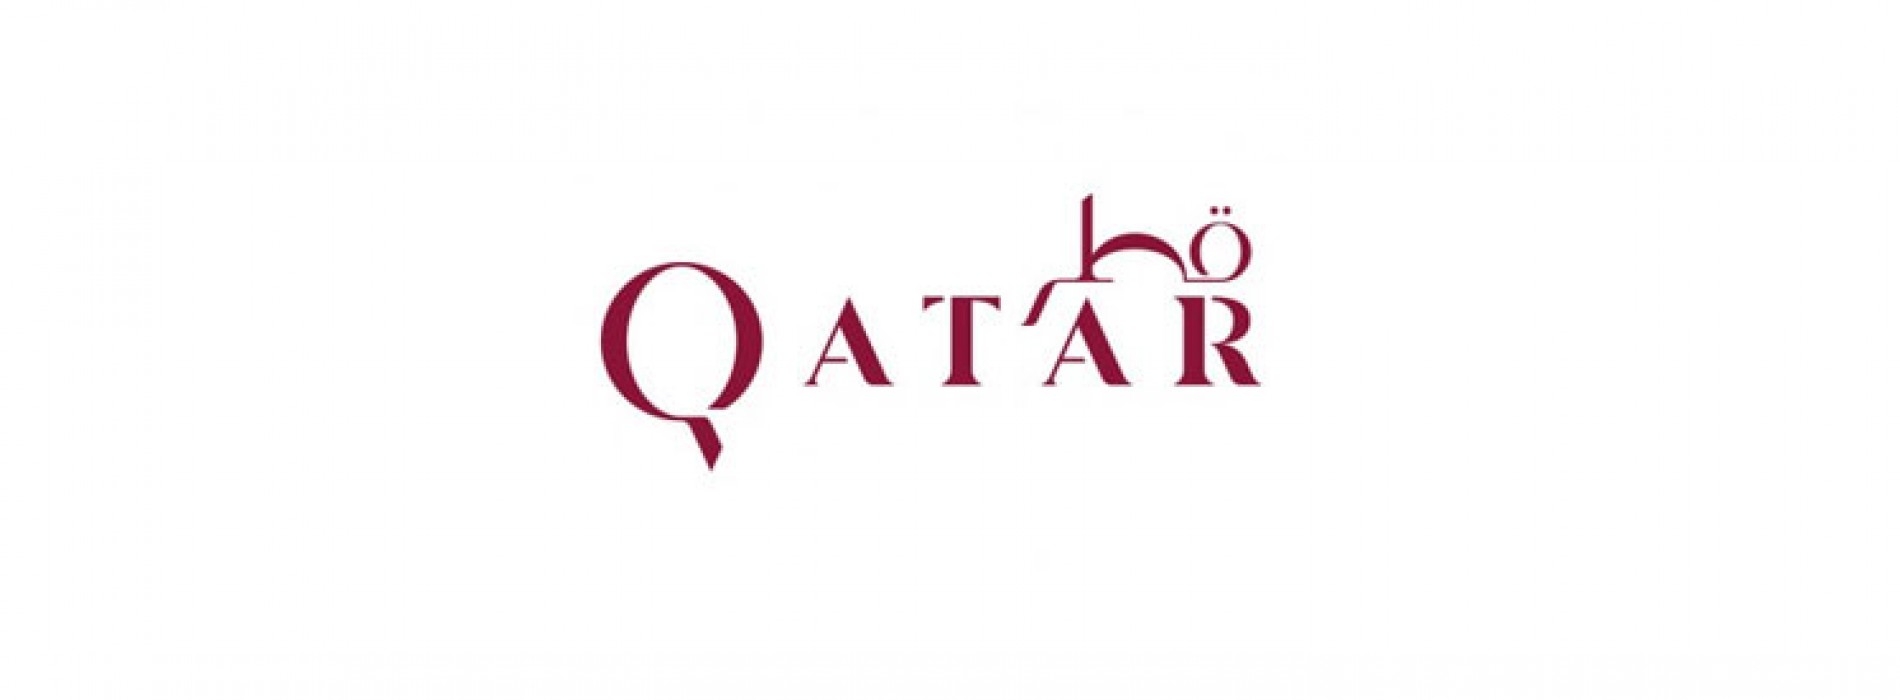 Qatar Airways showcases latestgeneration aircrafts